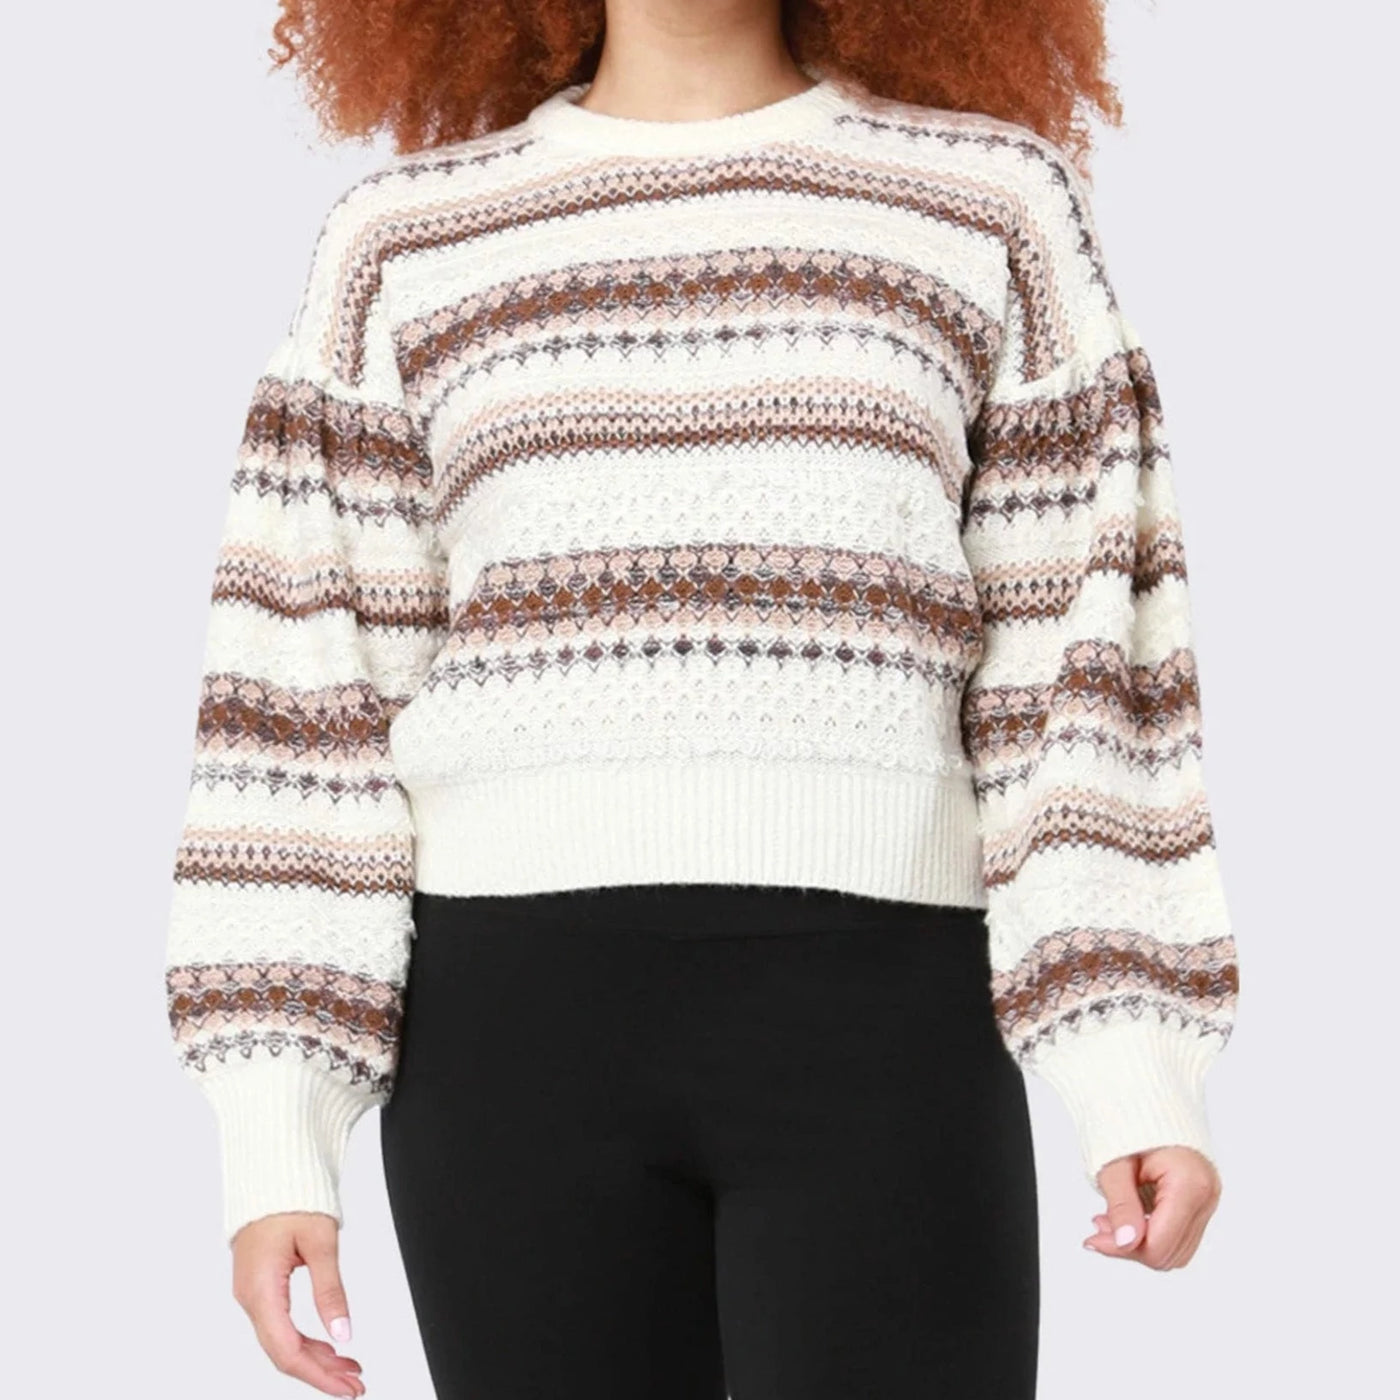 Fringe Knit Patterned Sweater